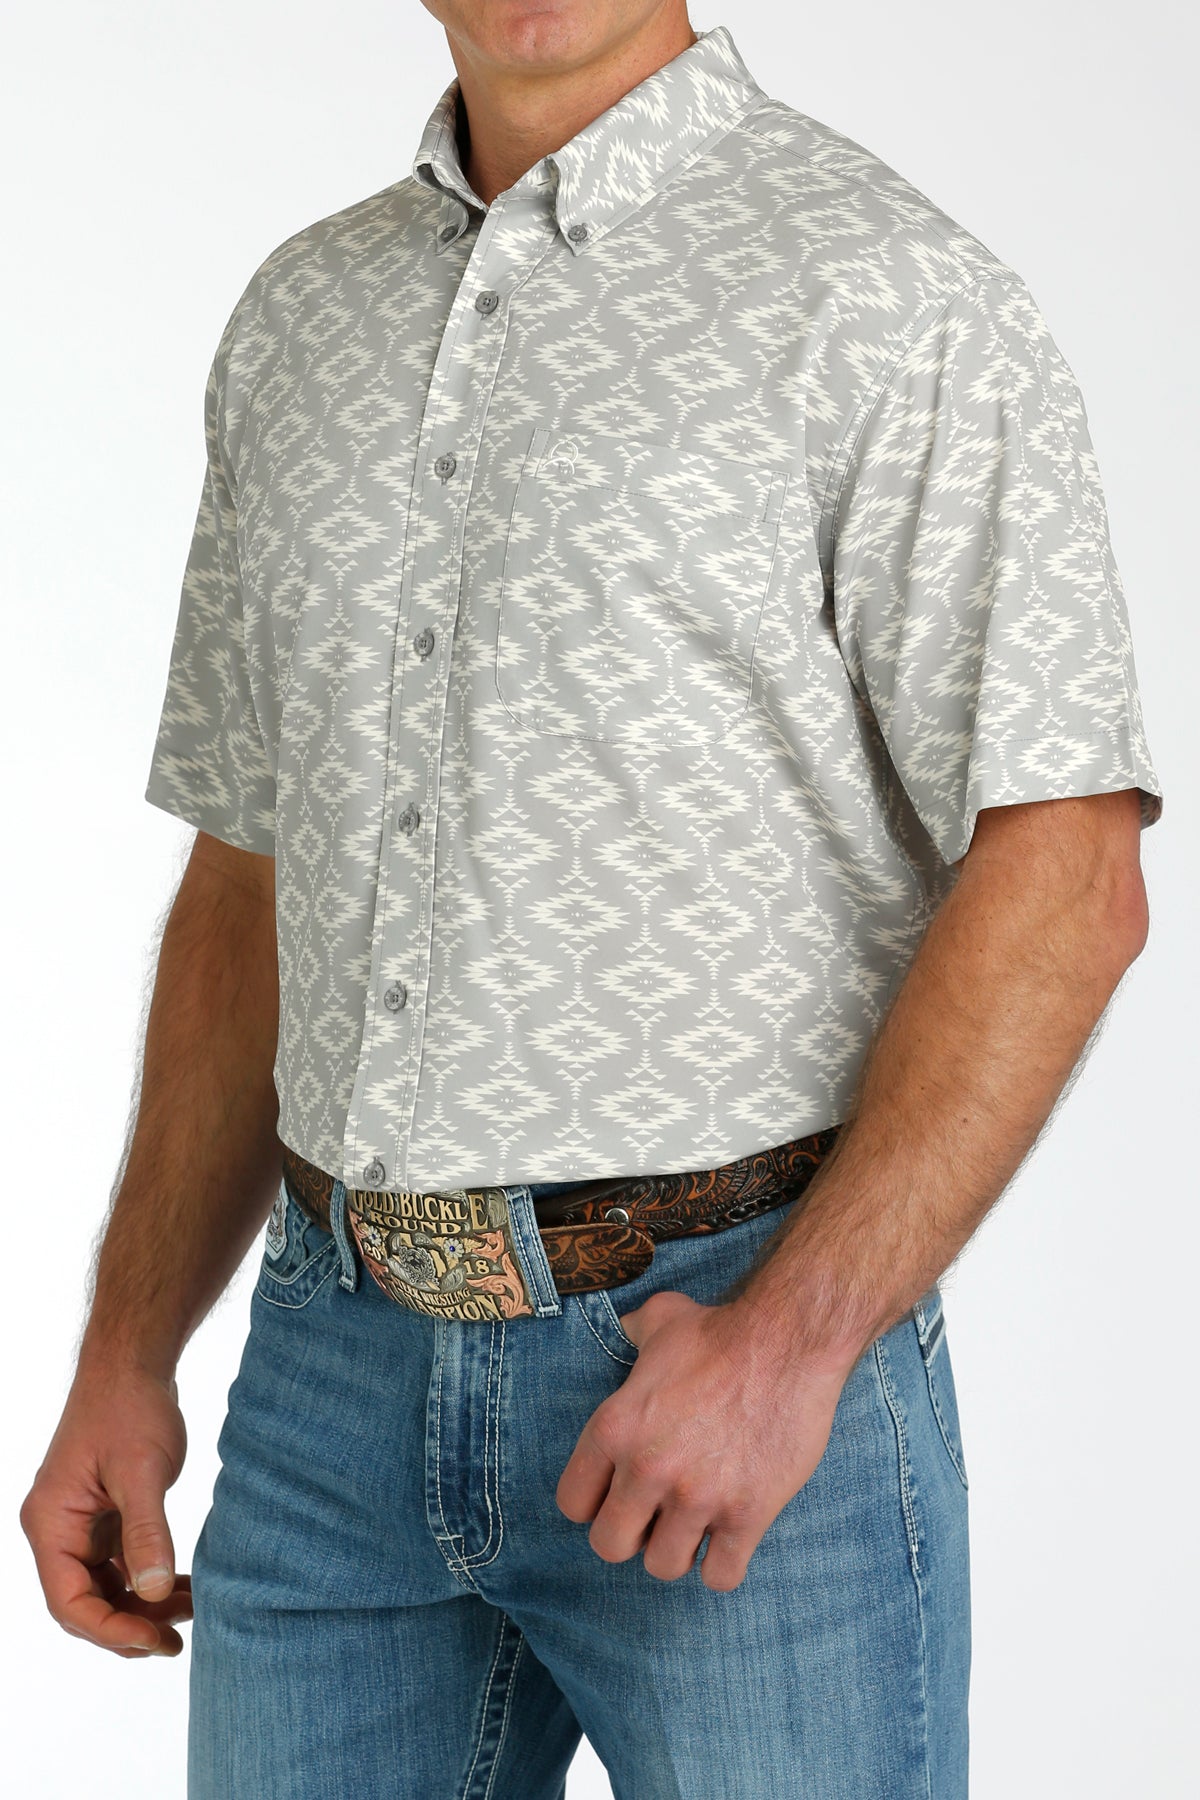 Cinch Men's Short Sleeve Shirt STYLE MTW1704135